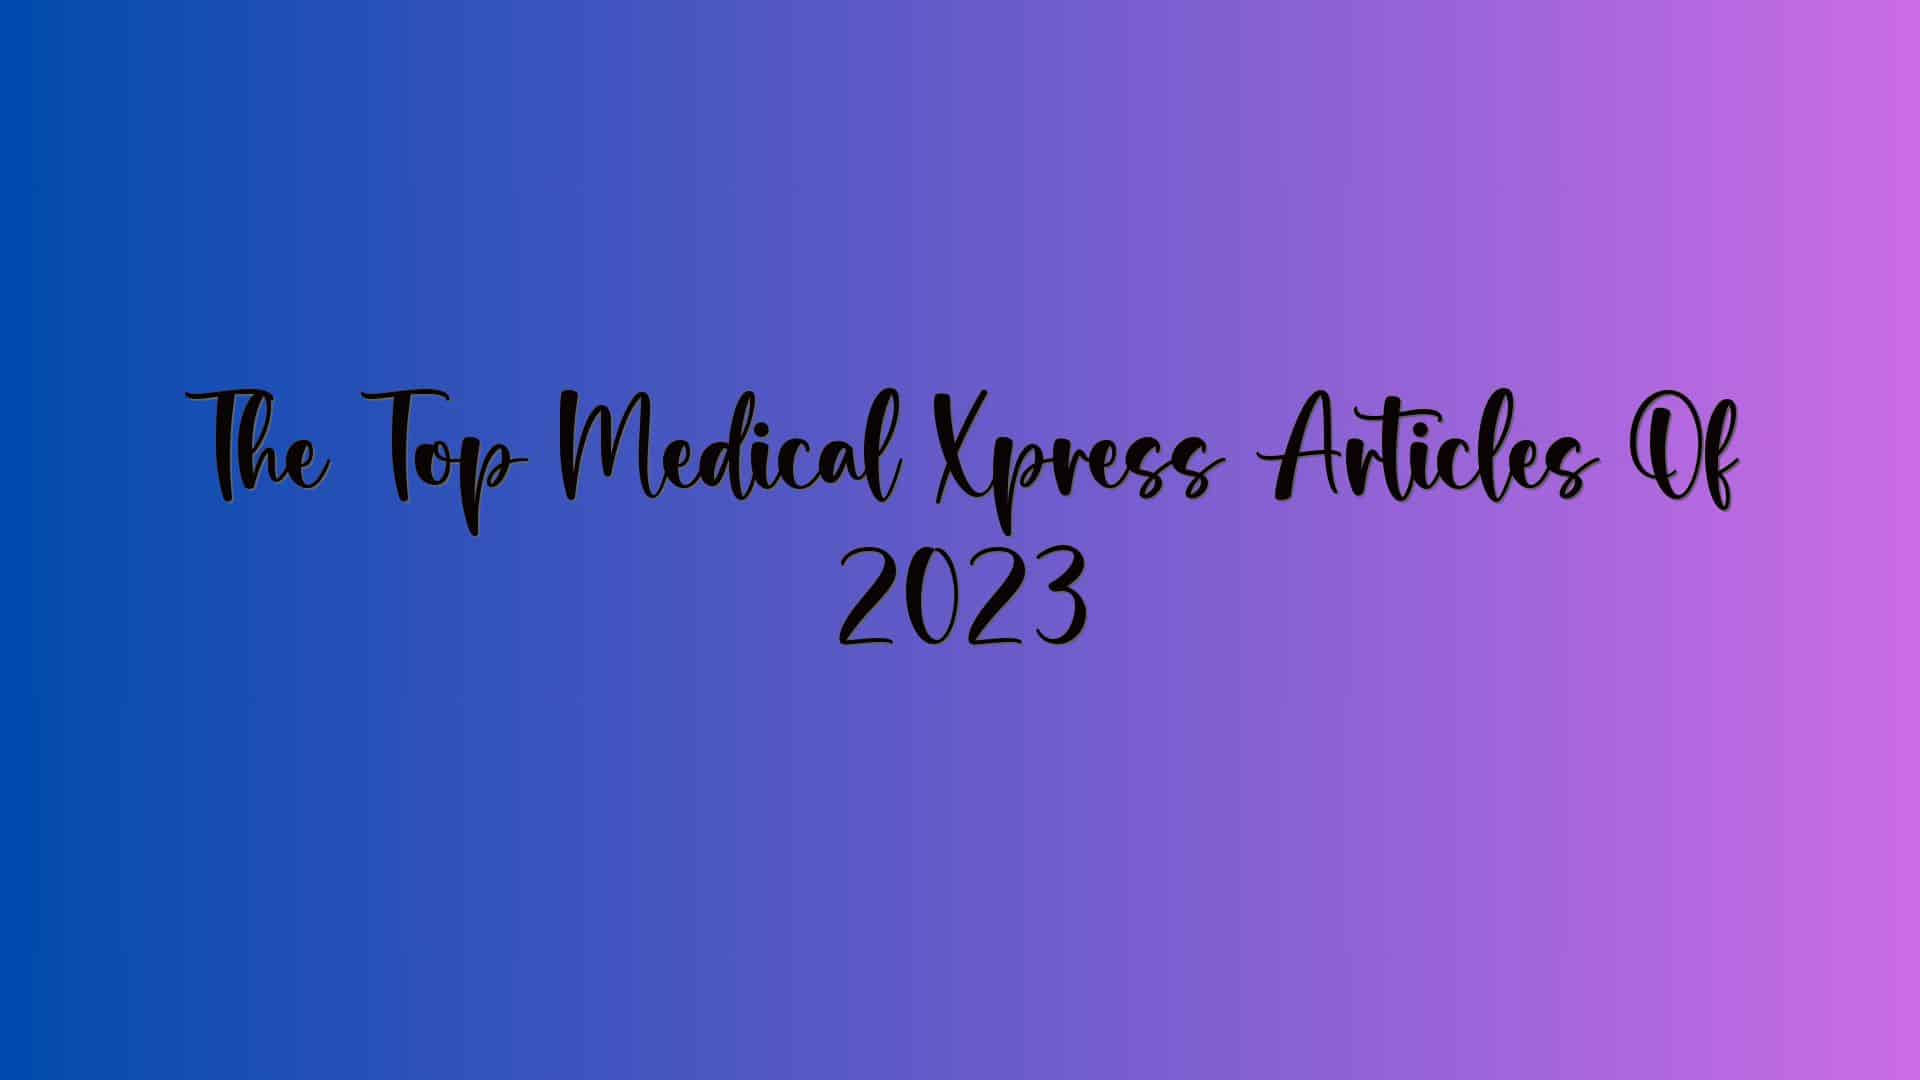 The Top Medical Xpress Articles Of 2023